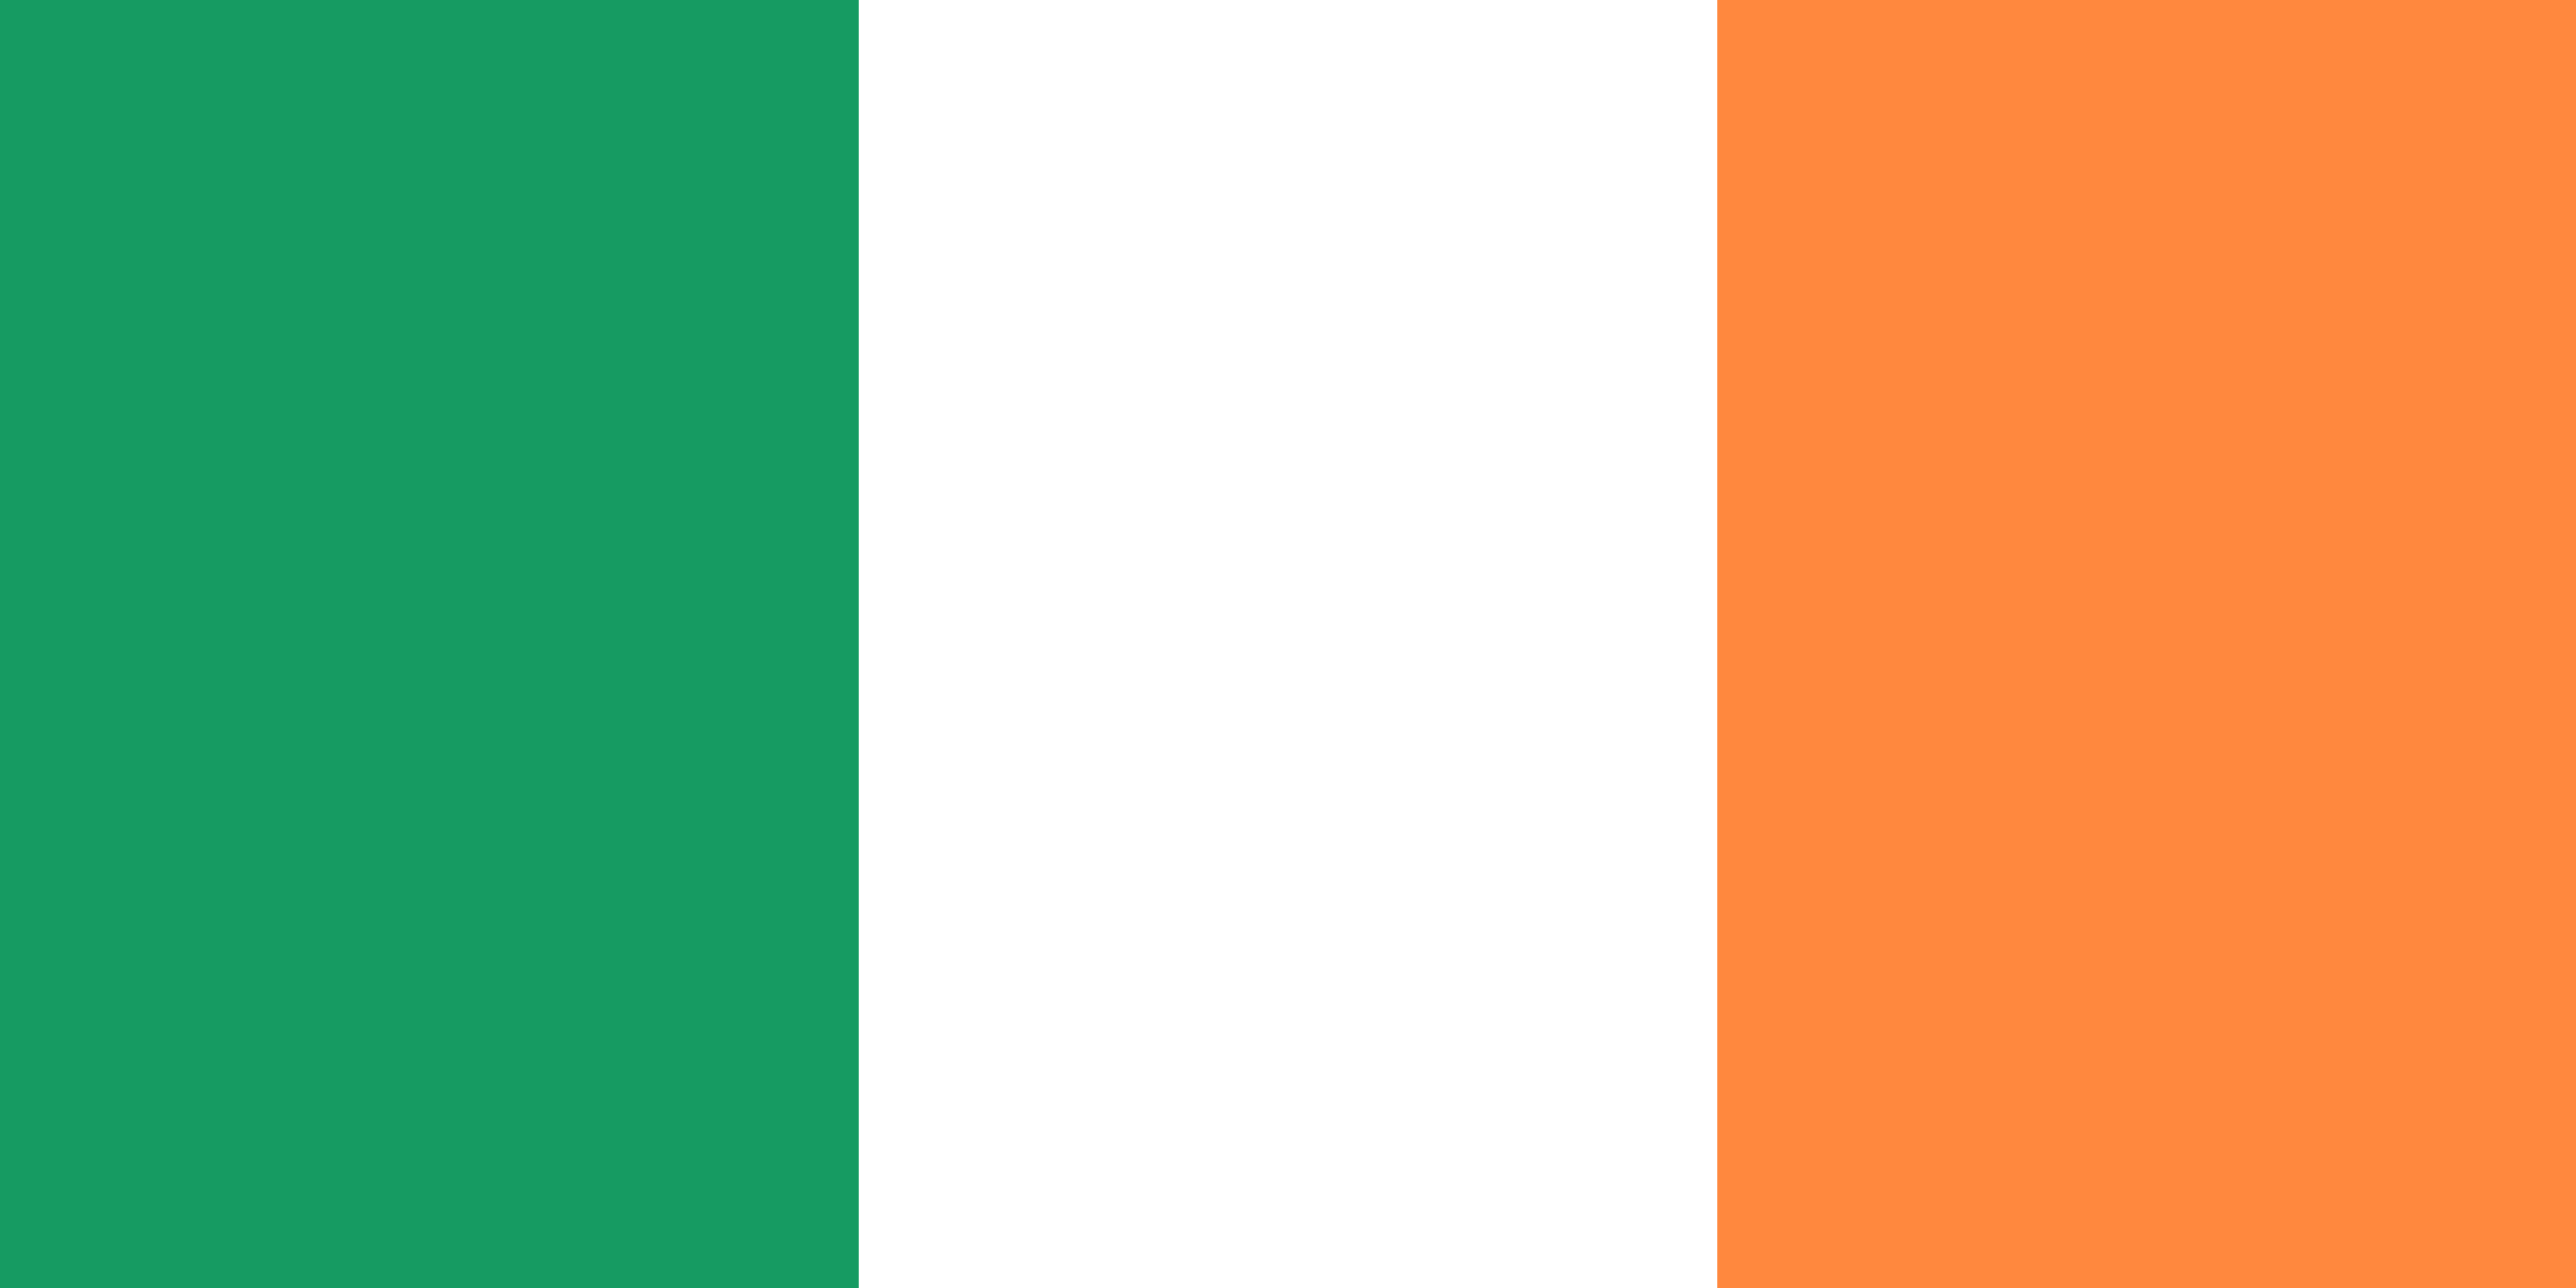 Ireland Flag Image - Free Download